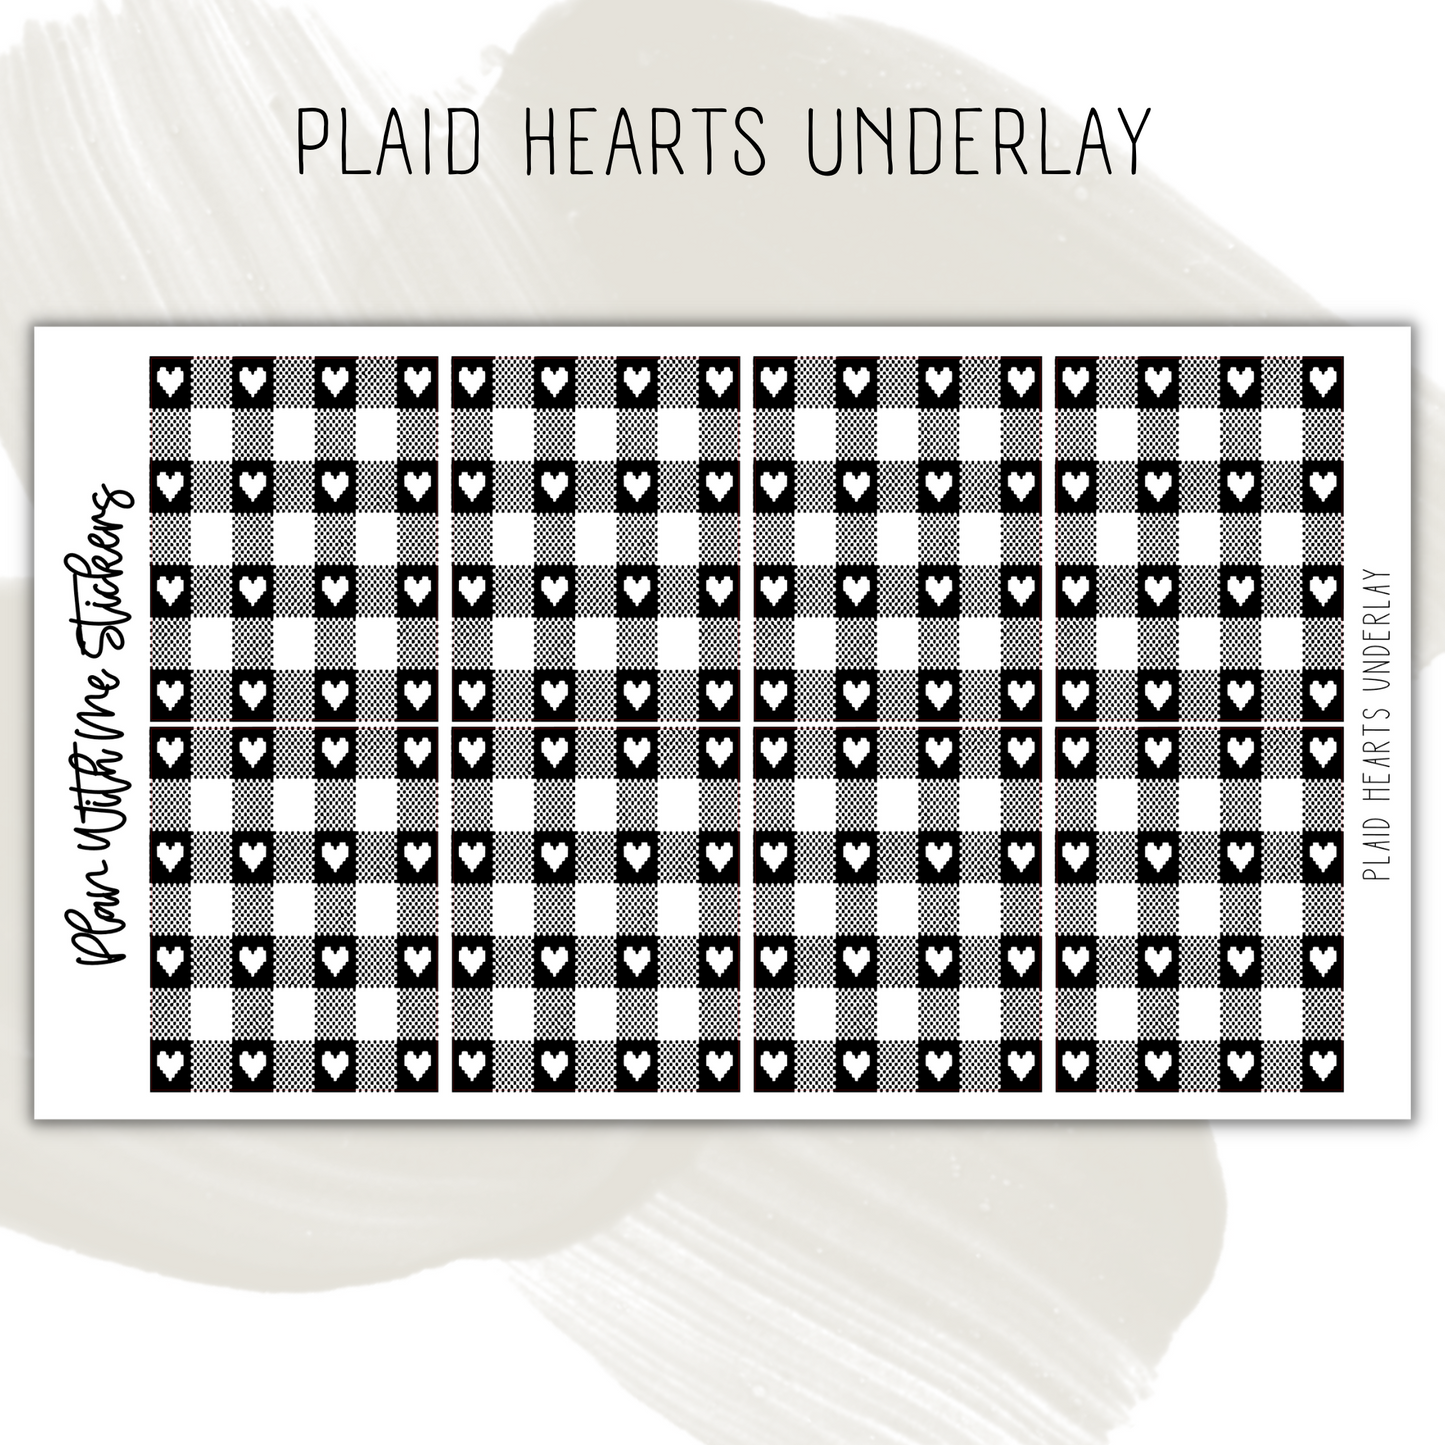 Plaid Hearts Underlay